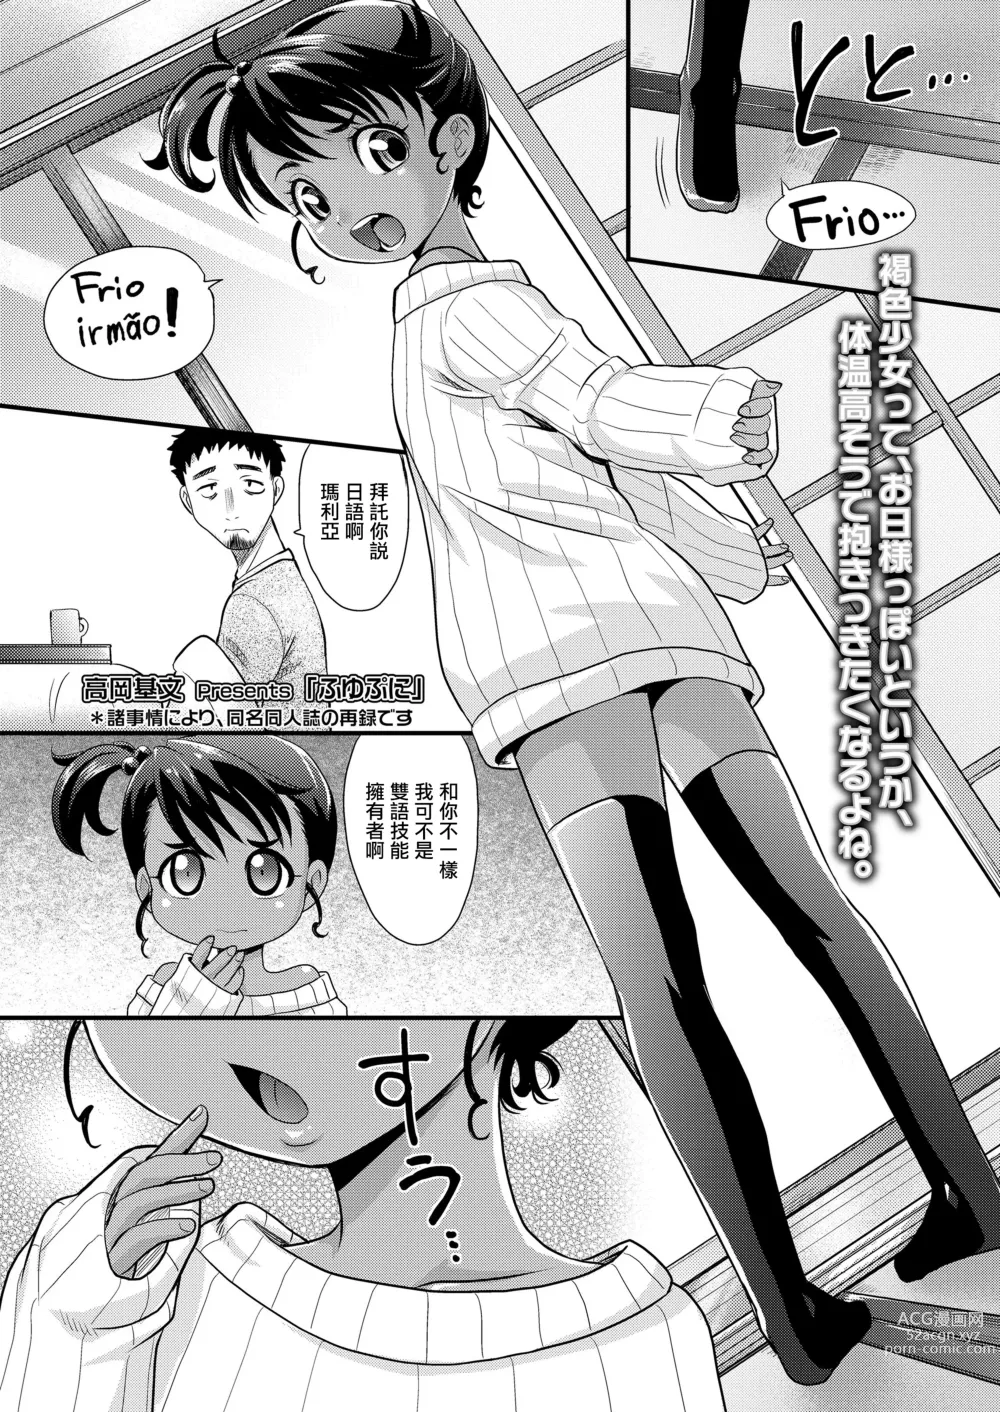 Page 1 of manga Fuyu Puni